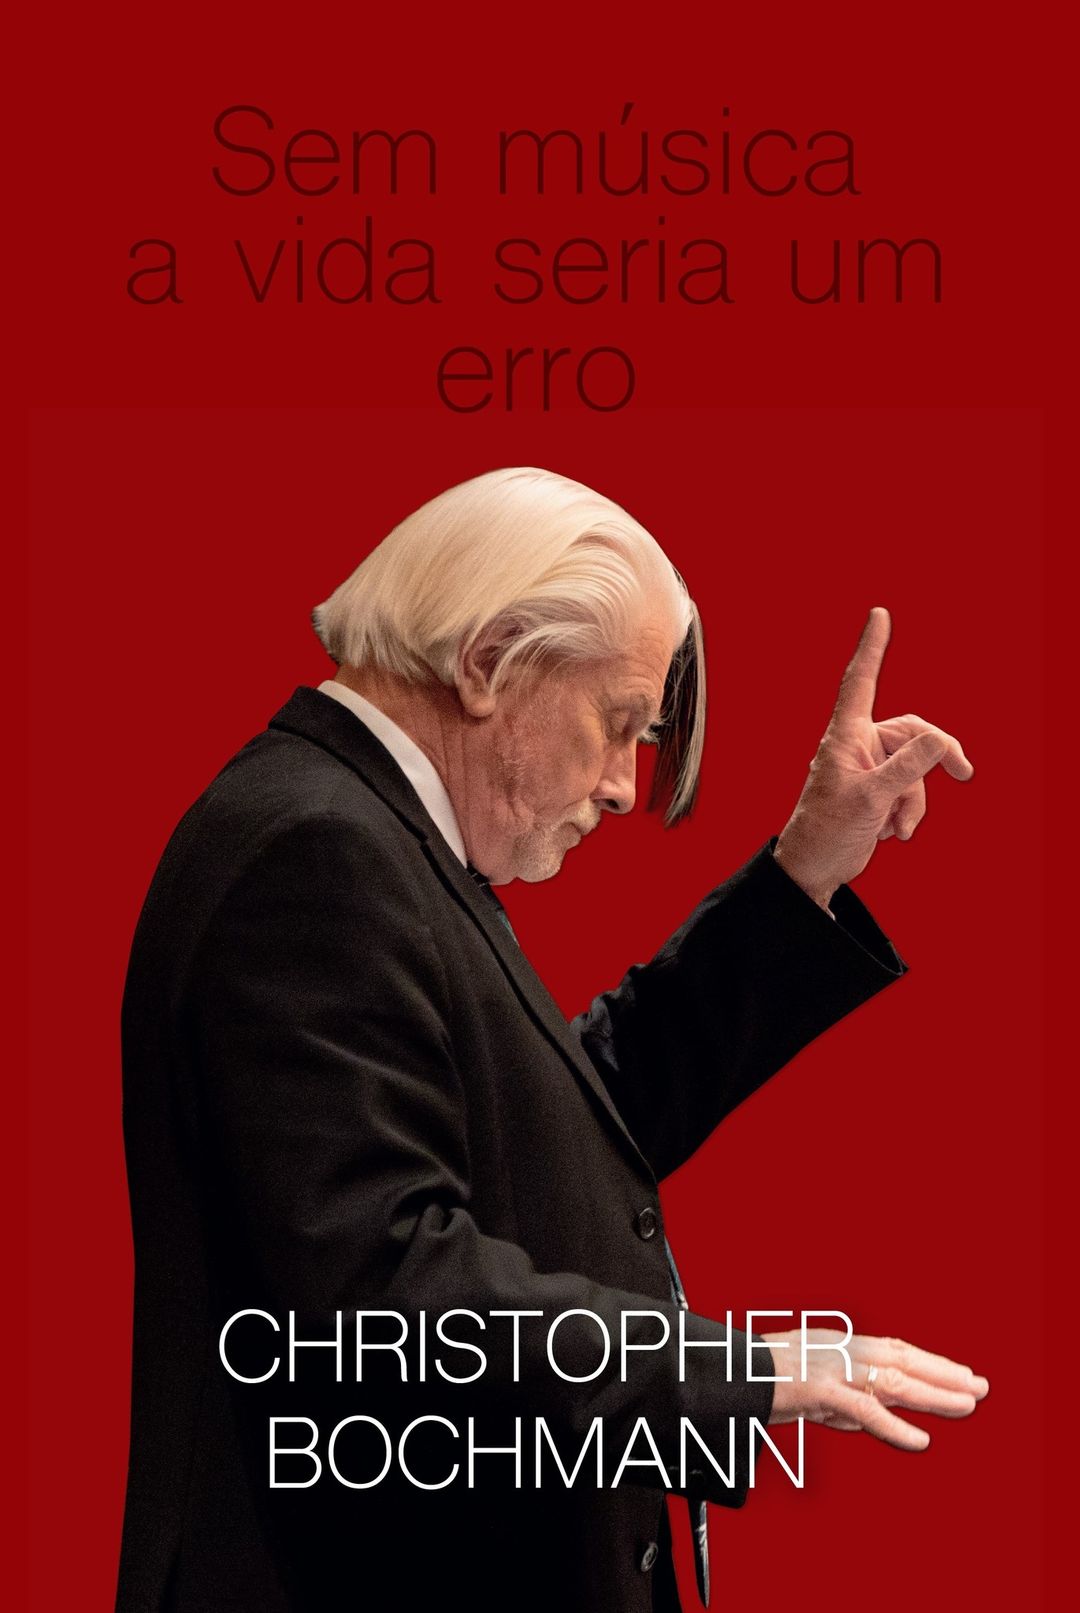 Sem música a vida seria um erro: Christopher Bochmann can be purchased at www.sinfonica-juvenil.com